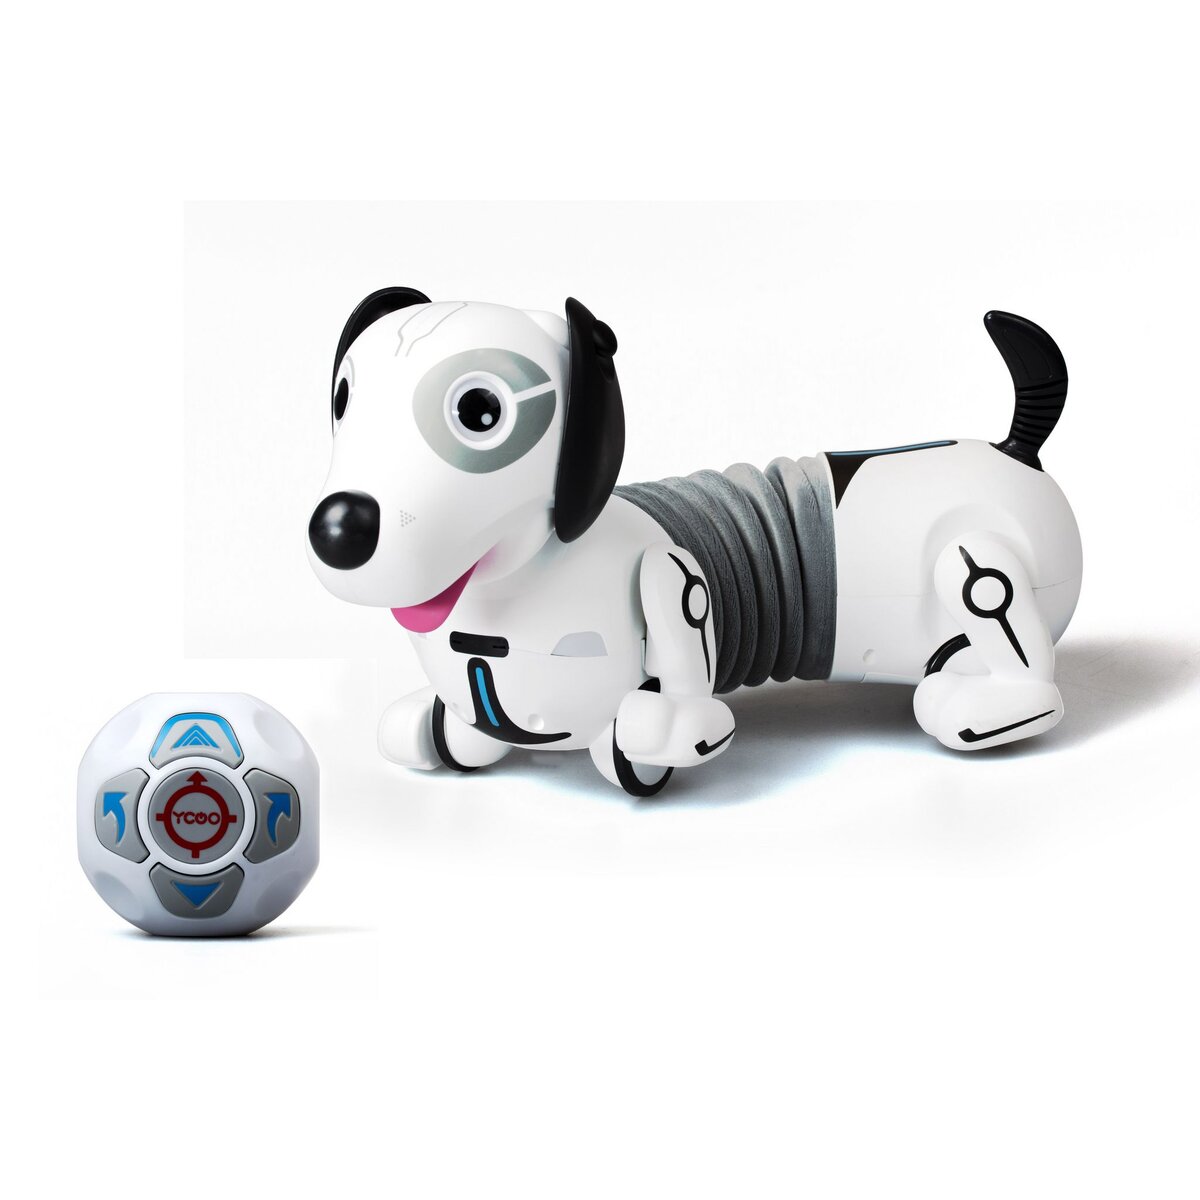 SILVERLIT Robot interactif Dackel le chien extensible radiocommandé